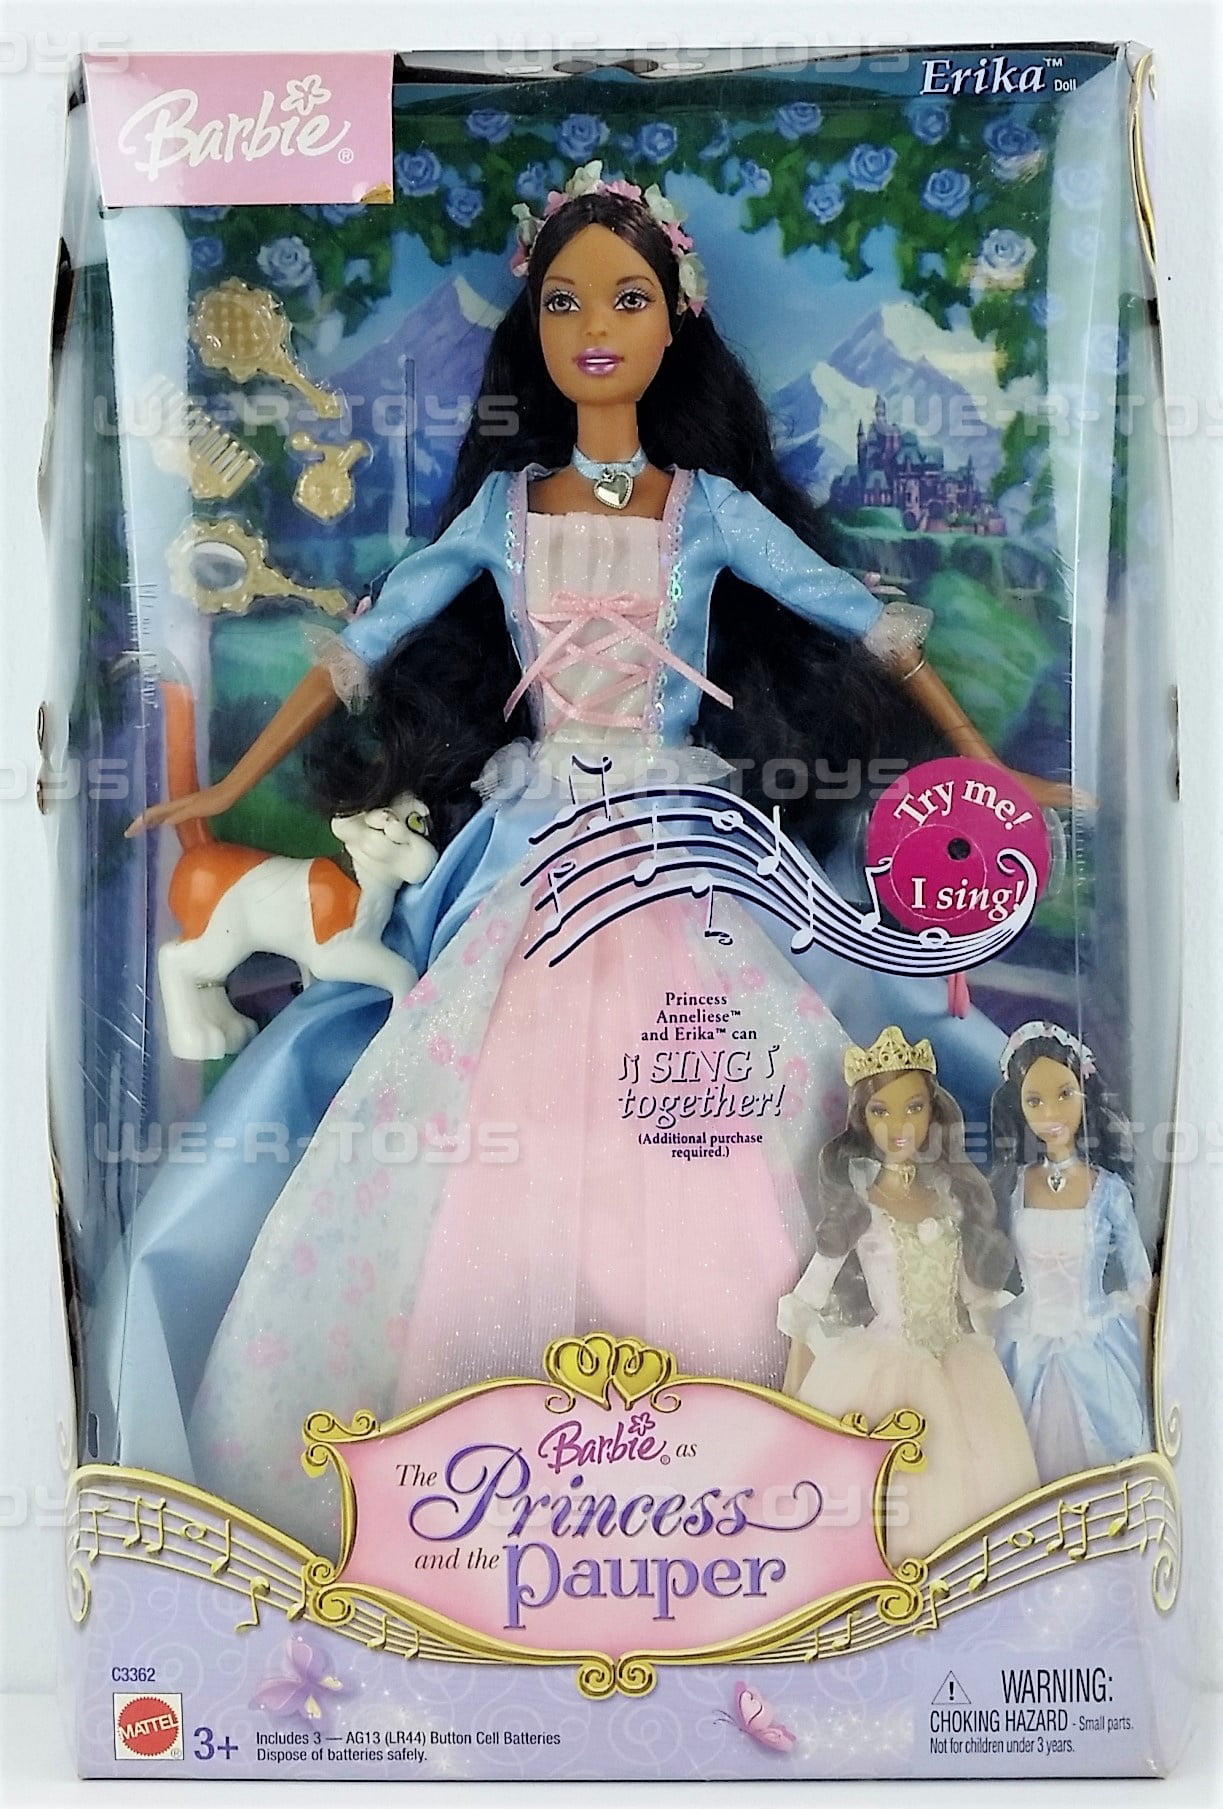 barbie princess and the pauper dolls